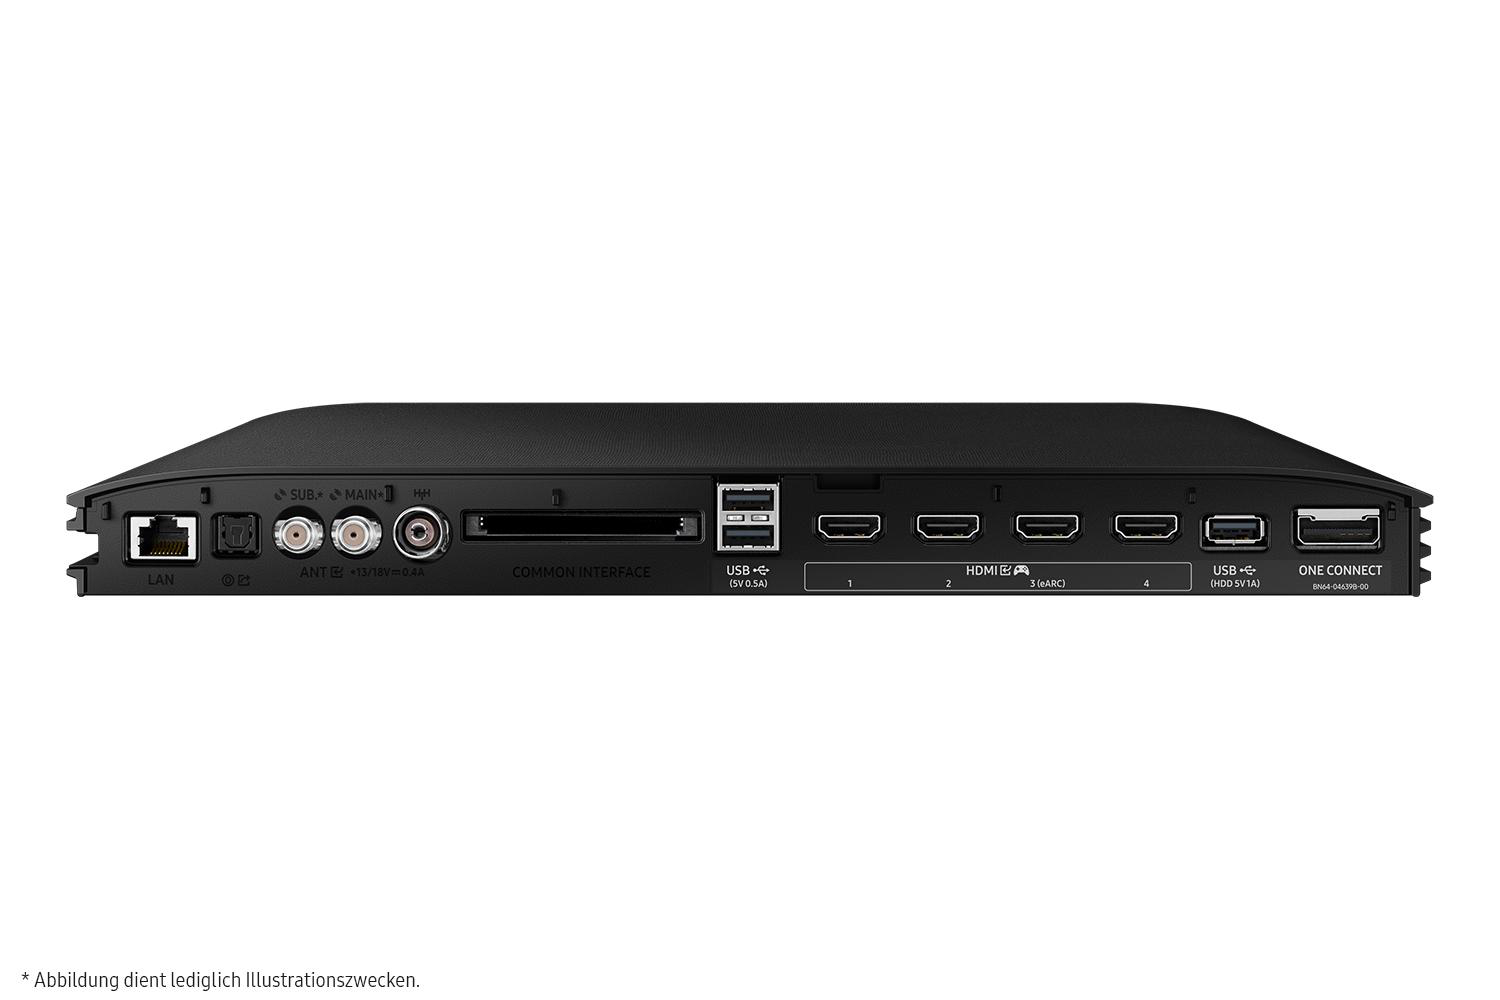 SMART SAMSUNG GQ65QN900C Zoll 163 8K, TV Neo QLED (Flat, cm, 65 / UHD TV, Tizen)